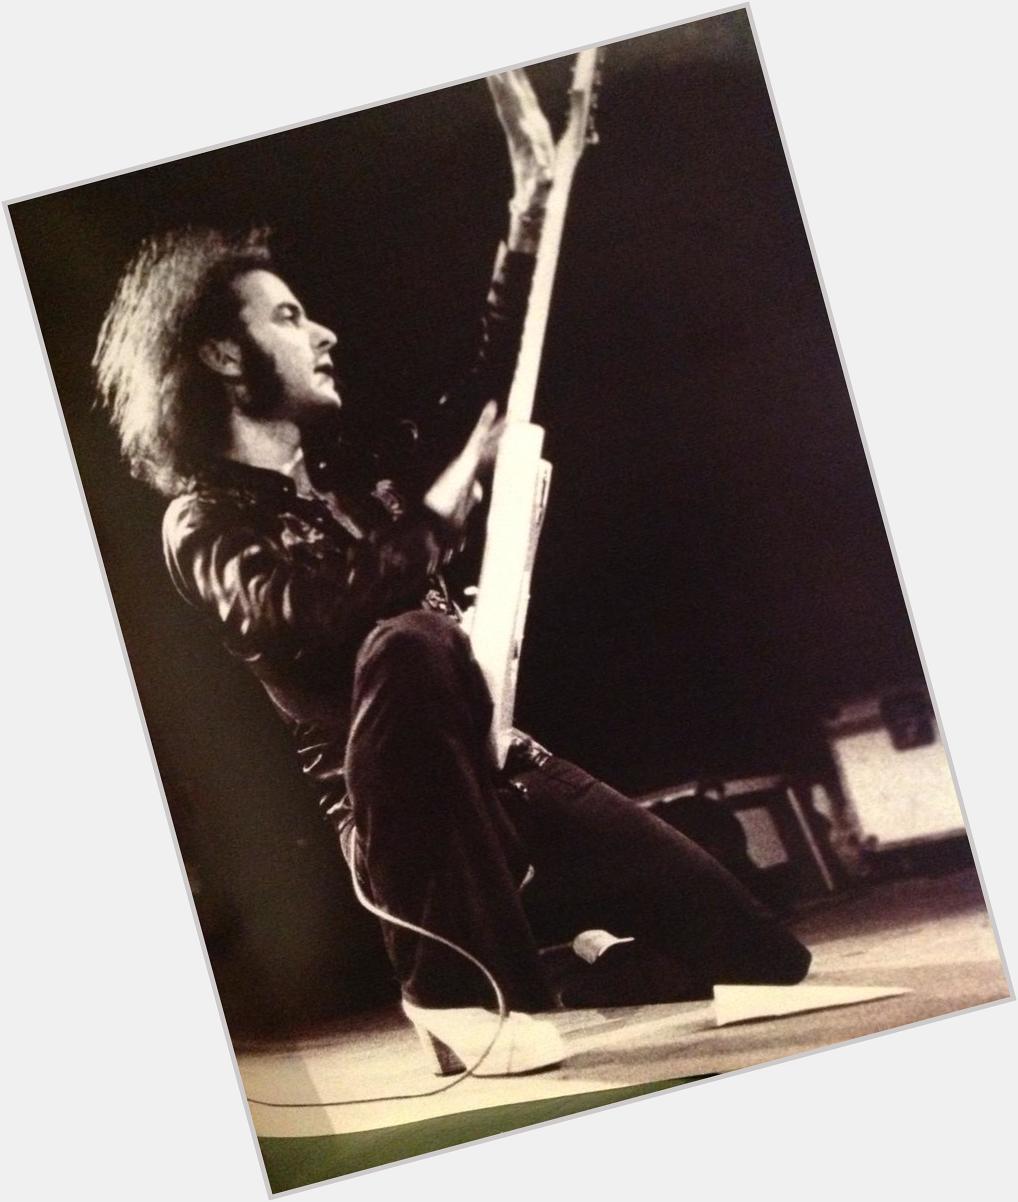 14/04/1945 Happy Birthday, Ritchie Blackmore, guitar extraordinaire
                    and vocals of Deep Purple 